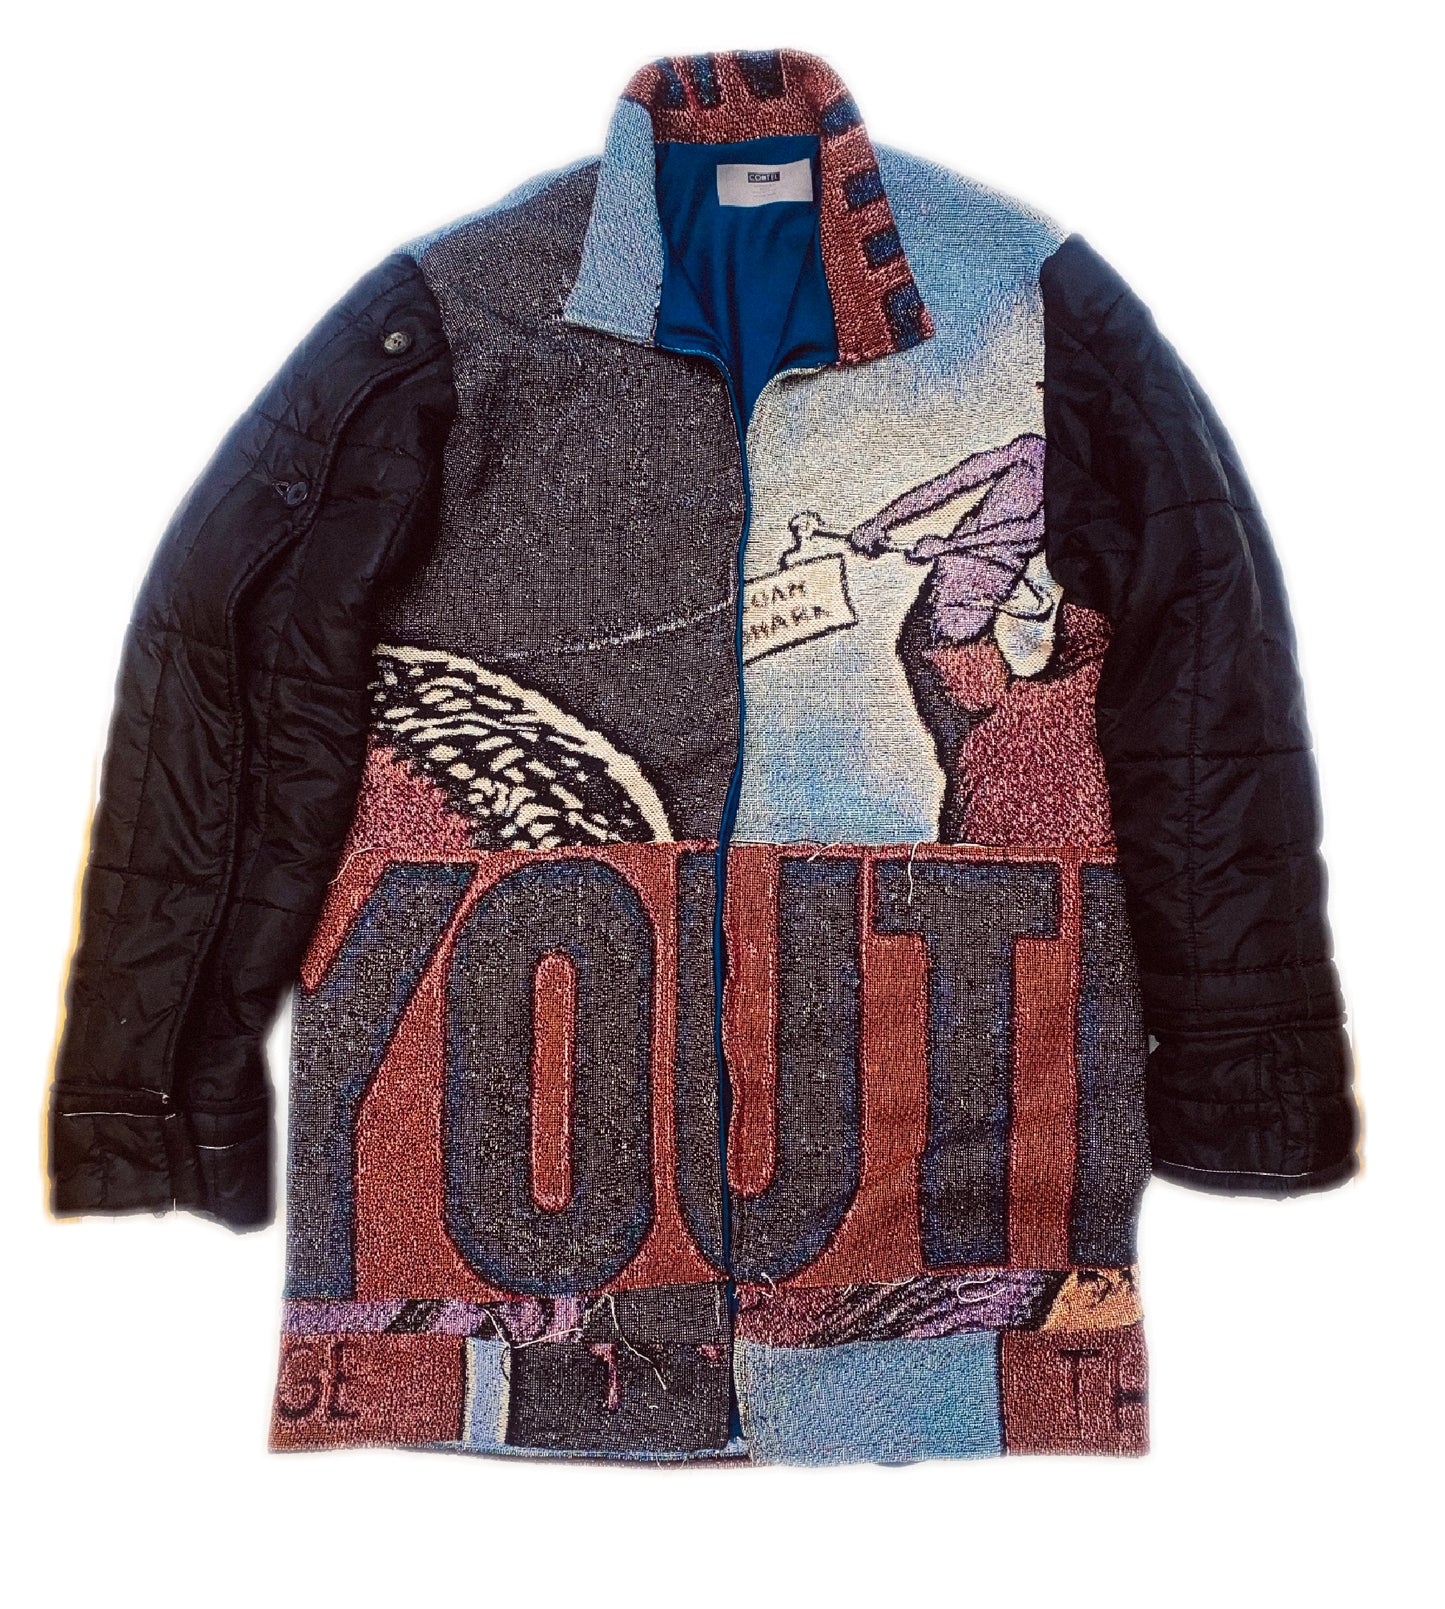 1of1 “YOUTH” Jacket